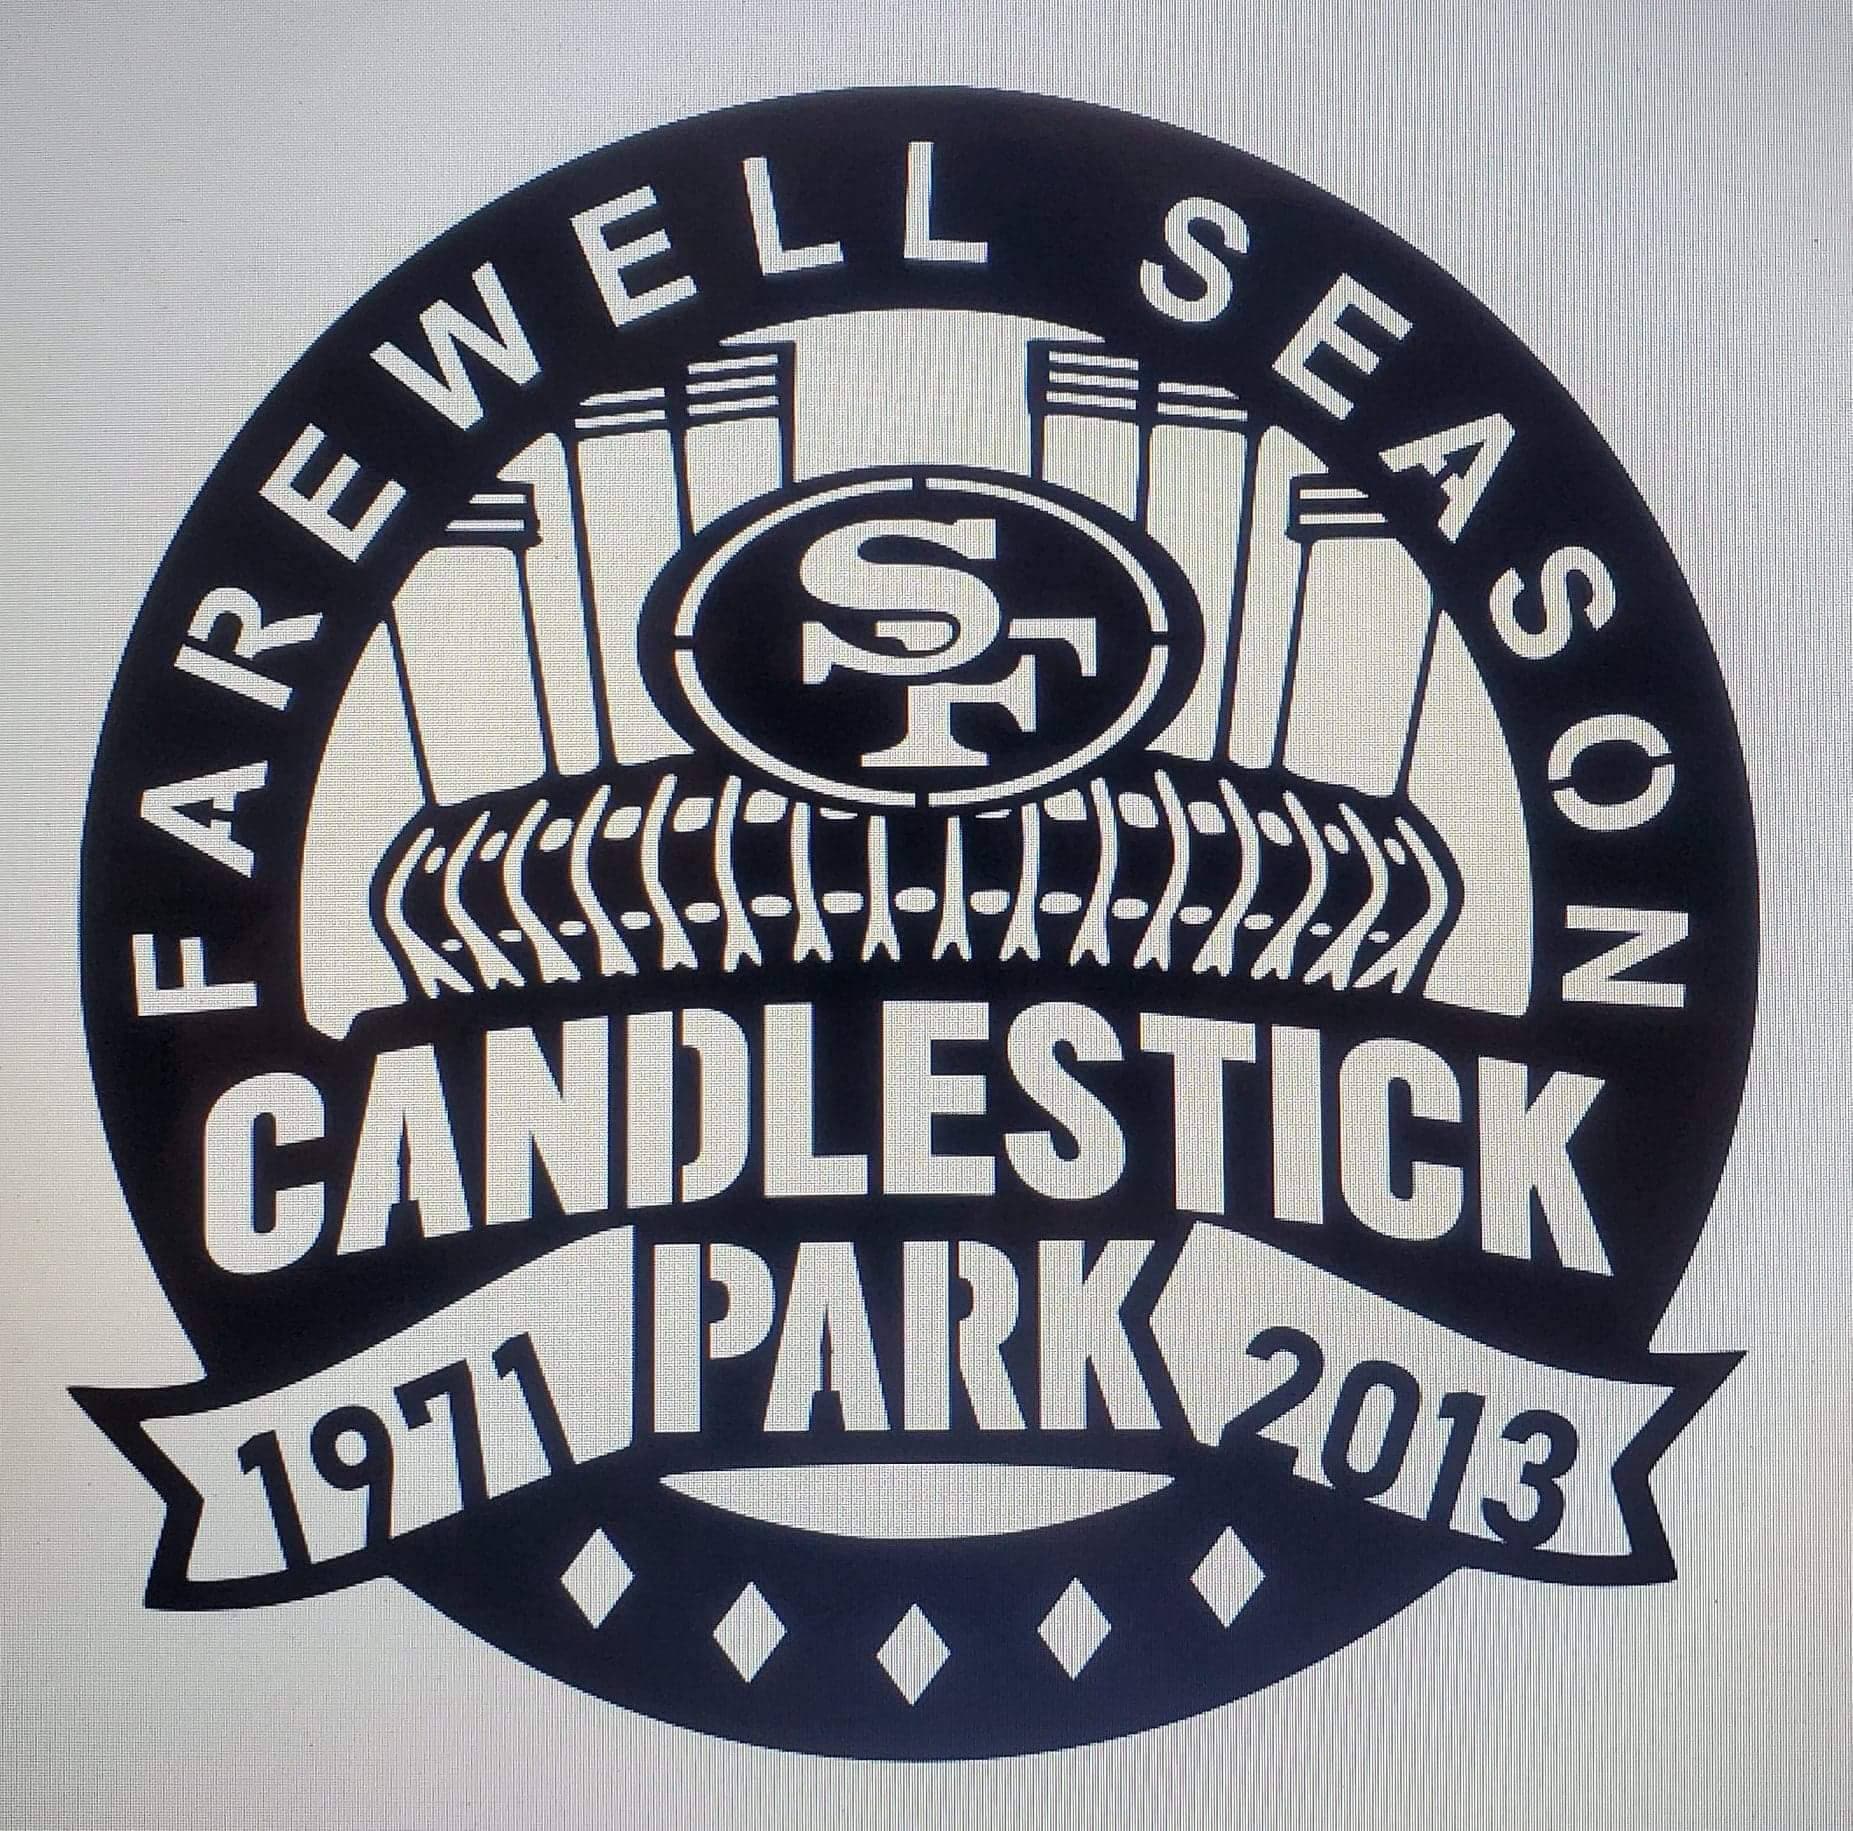 SF 49ers Farewell Season Candlestick Park 1971 to 2013 Metal Art Sign, San  Francisco 49ers Metal Art Sign, SF49ers Metal Art Sign